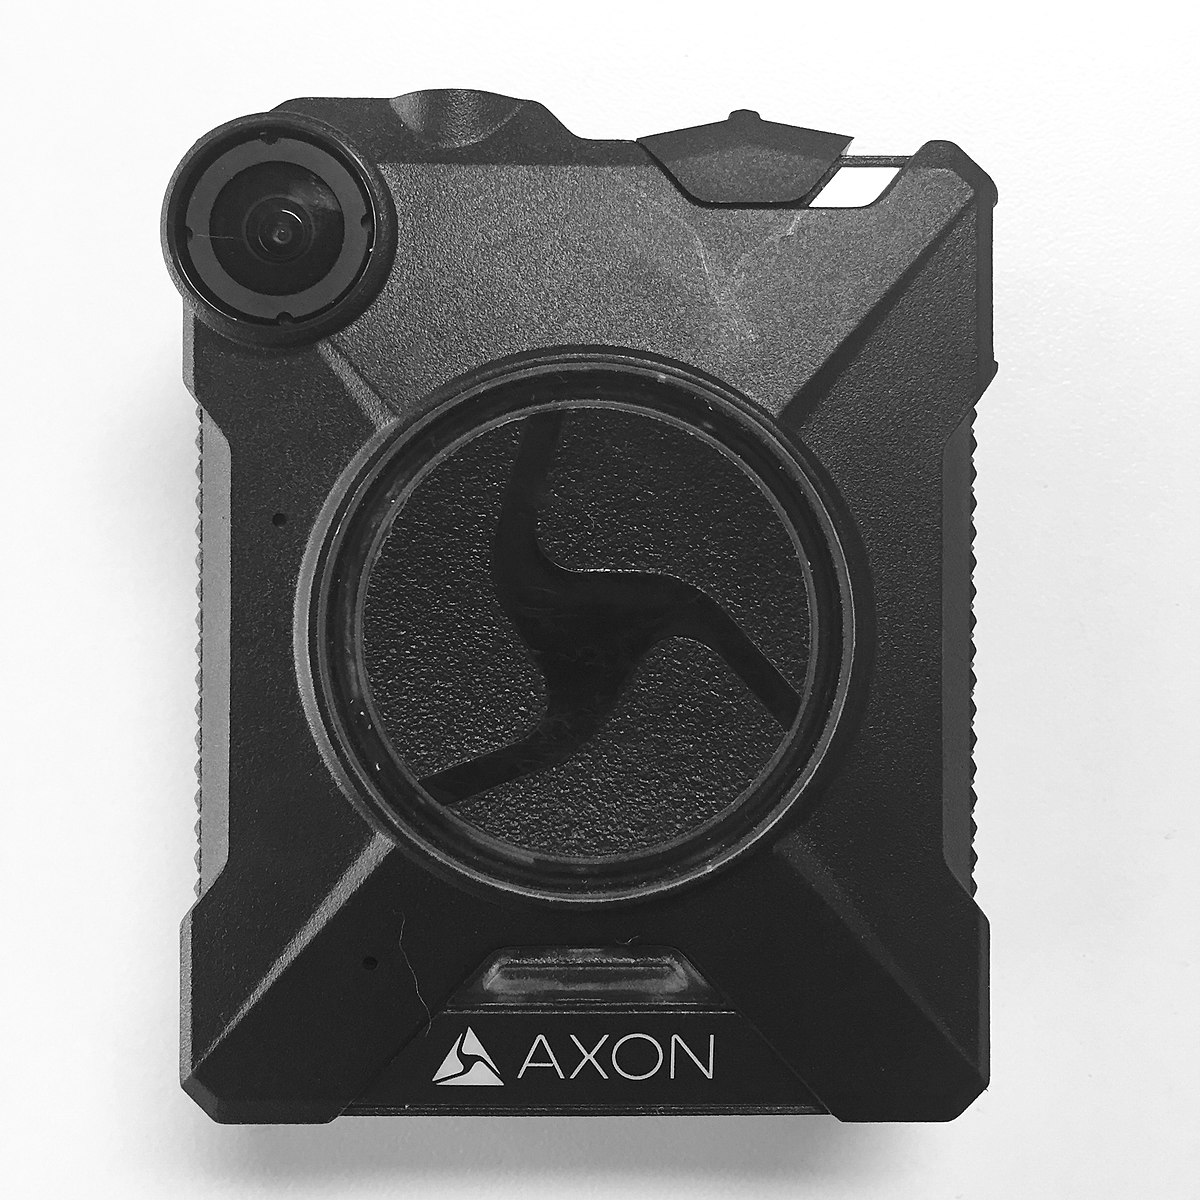 Axon body camera gta 5 фото 101